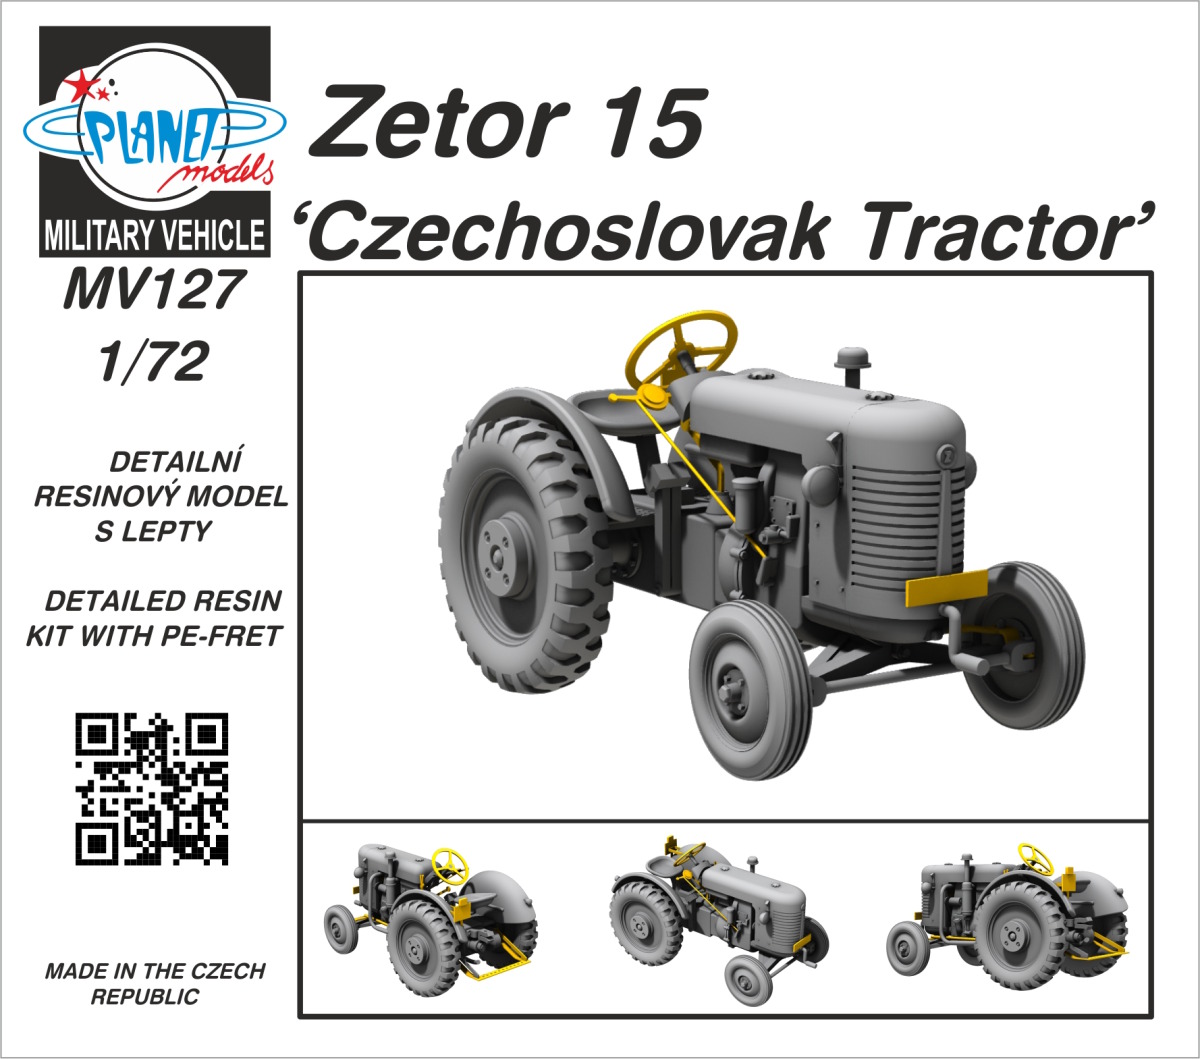 1/72 Zetor 15 ‘Czechoslovak Tractor’